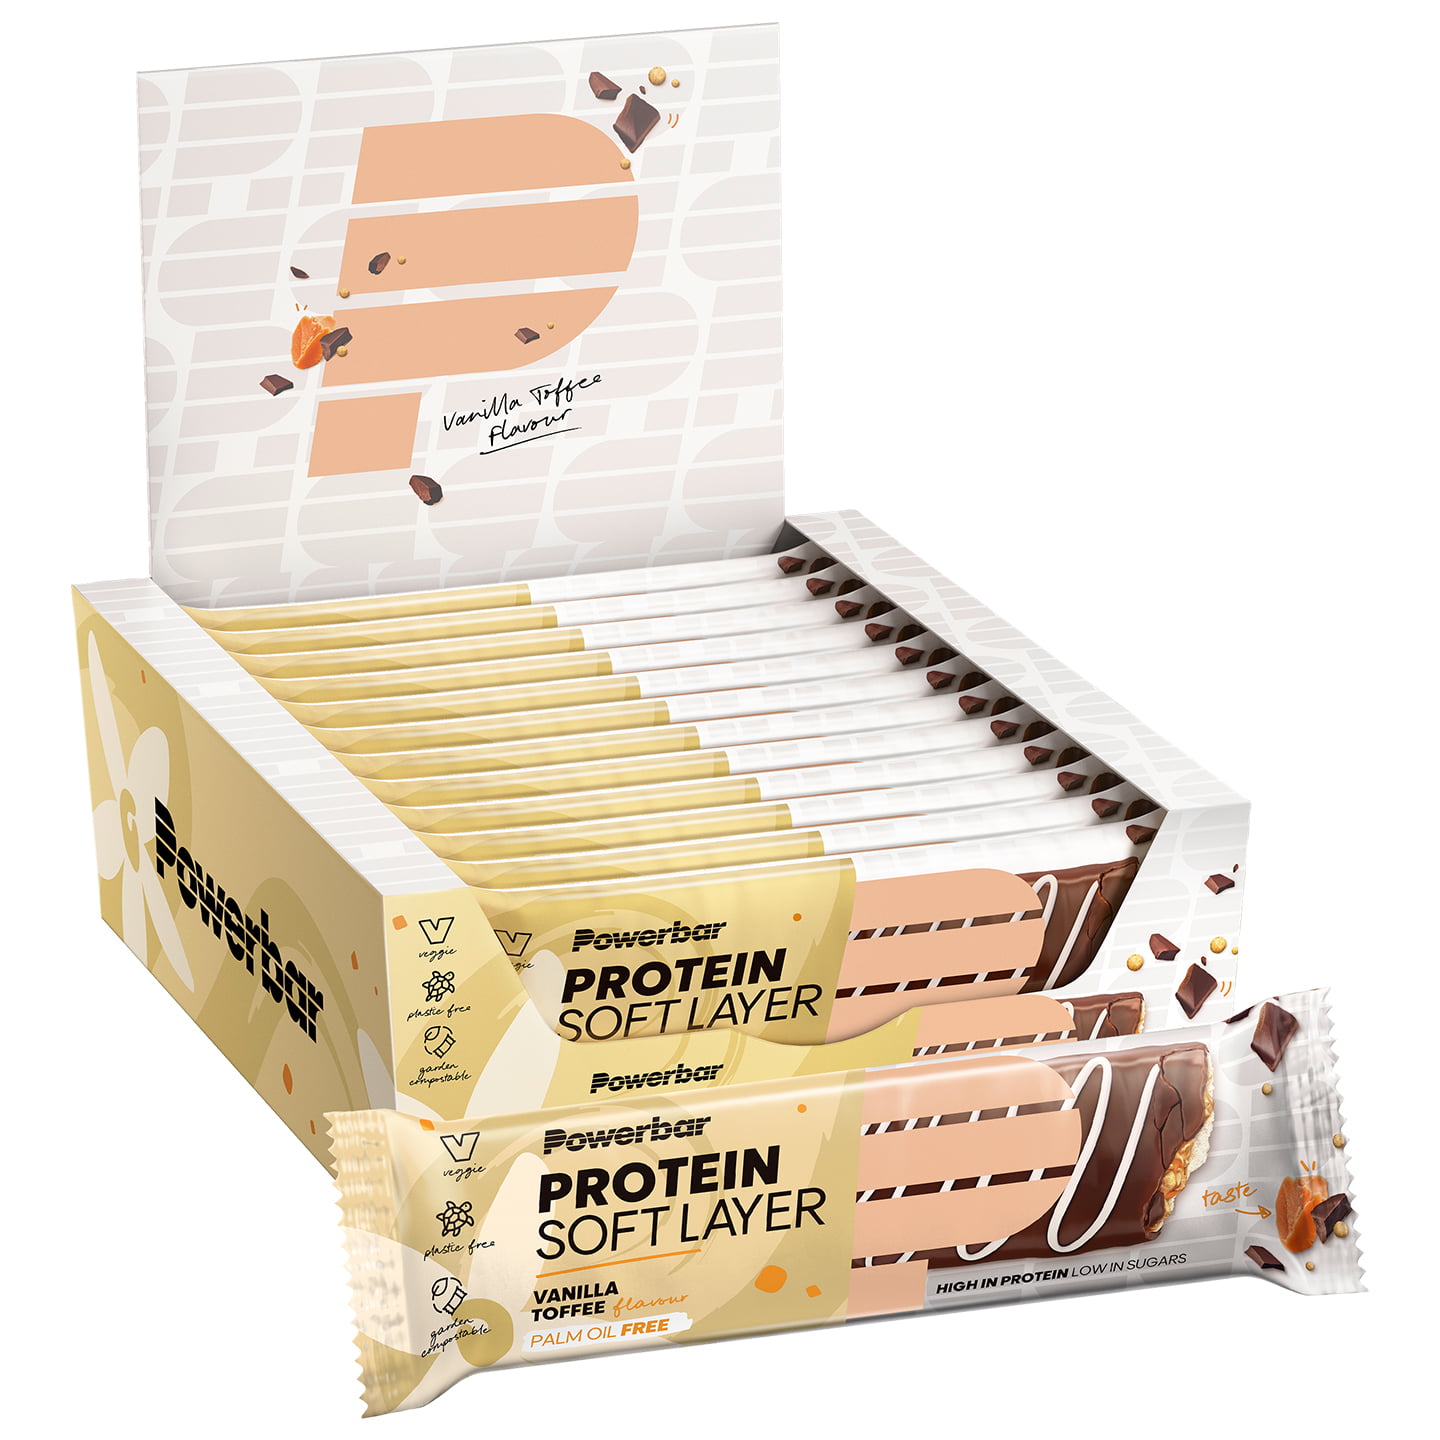 POWERBAR Protein Soft Layer Riege Vanilla Toffee 12 Bars per Box Bar, Sports food